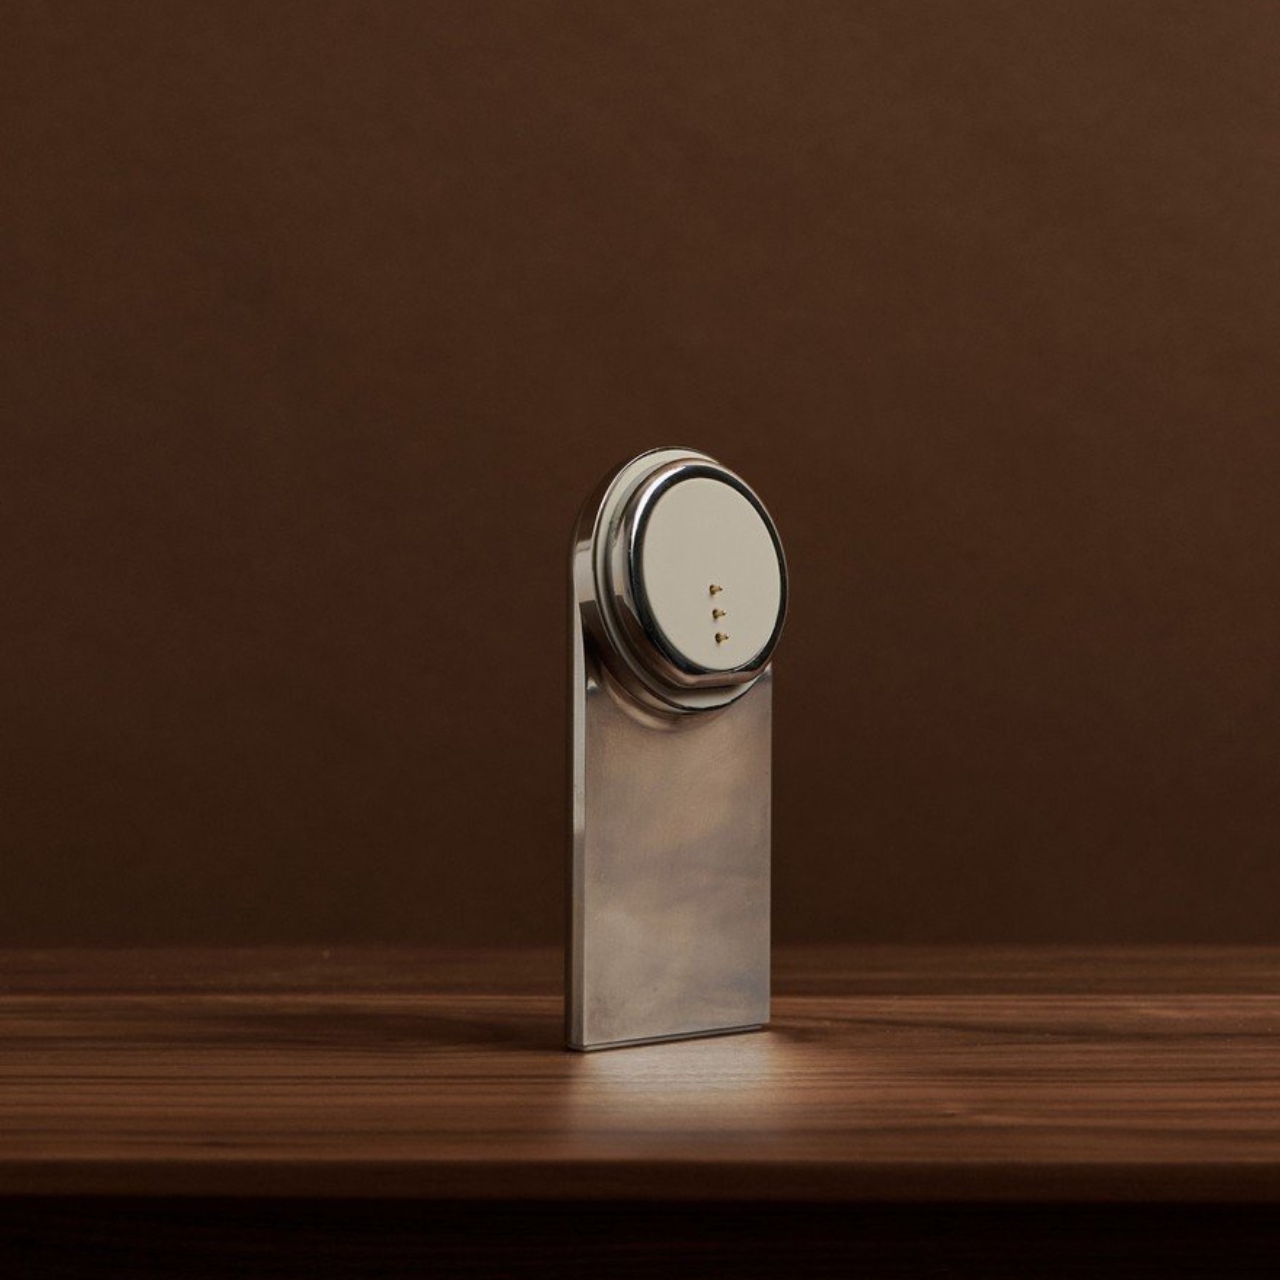 Sleek, metallic Bluetooth speaker concept can match your minimalist aesthetic